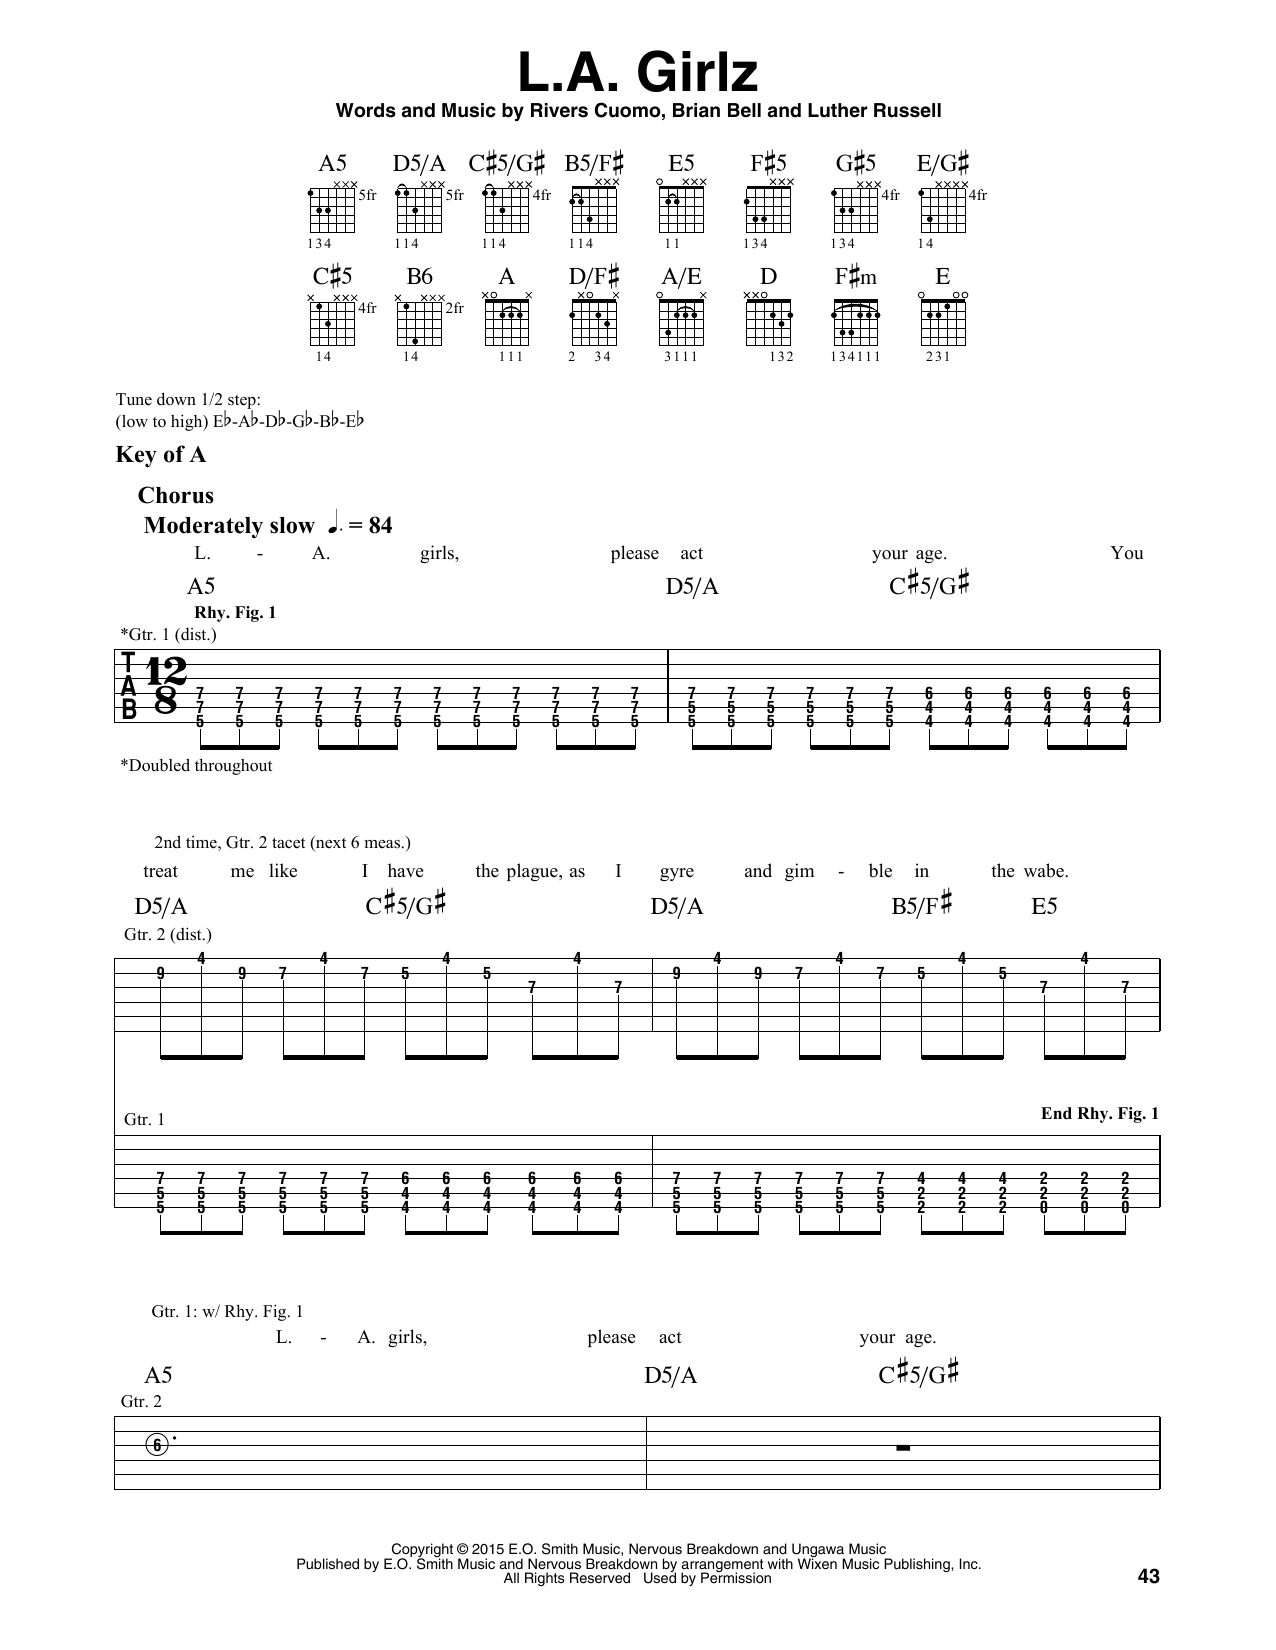 Weezer L.A. Girlz Sheet Music Notes & Chords for Guitar Lead Sheet - Download or Print PDF